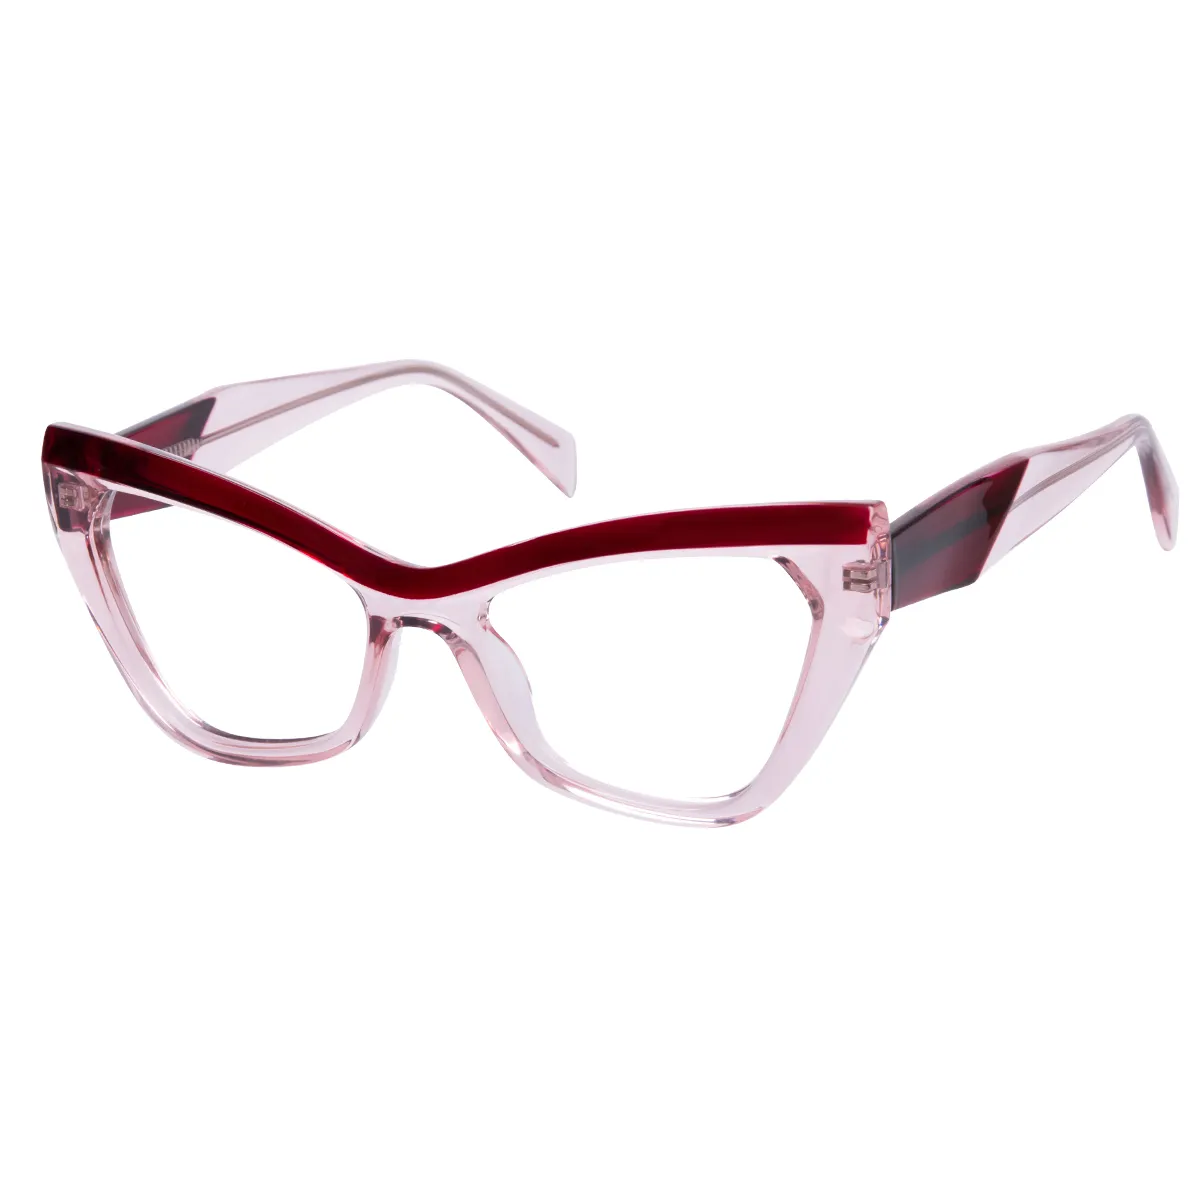 Cressida - Cat-eye Translucent Pink Glasses for Women